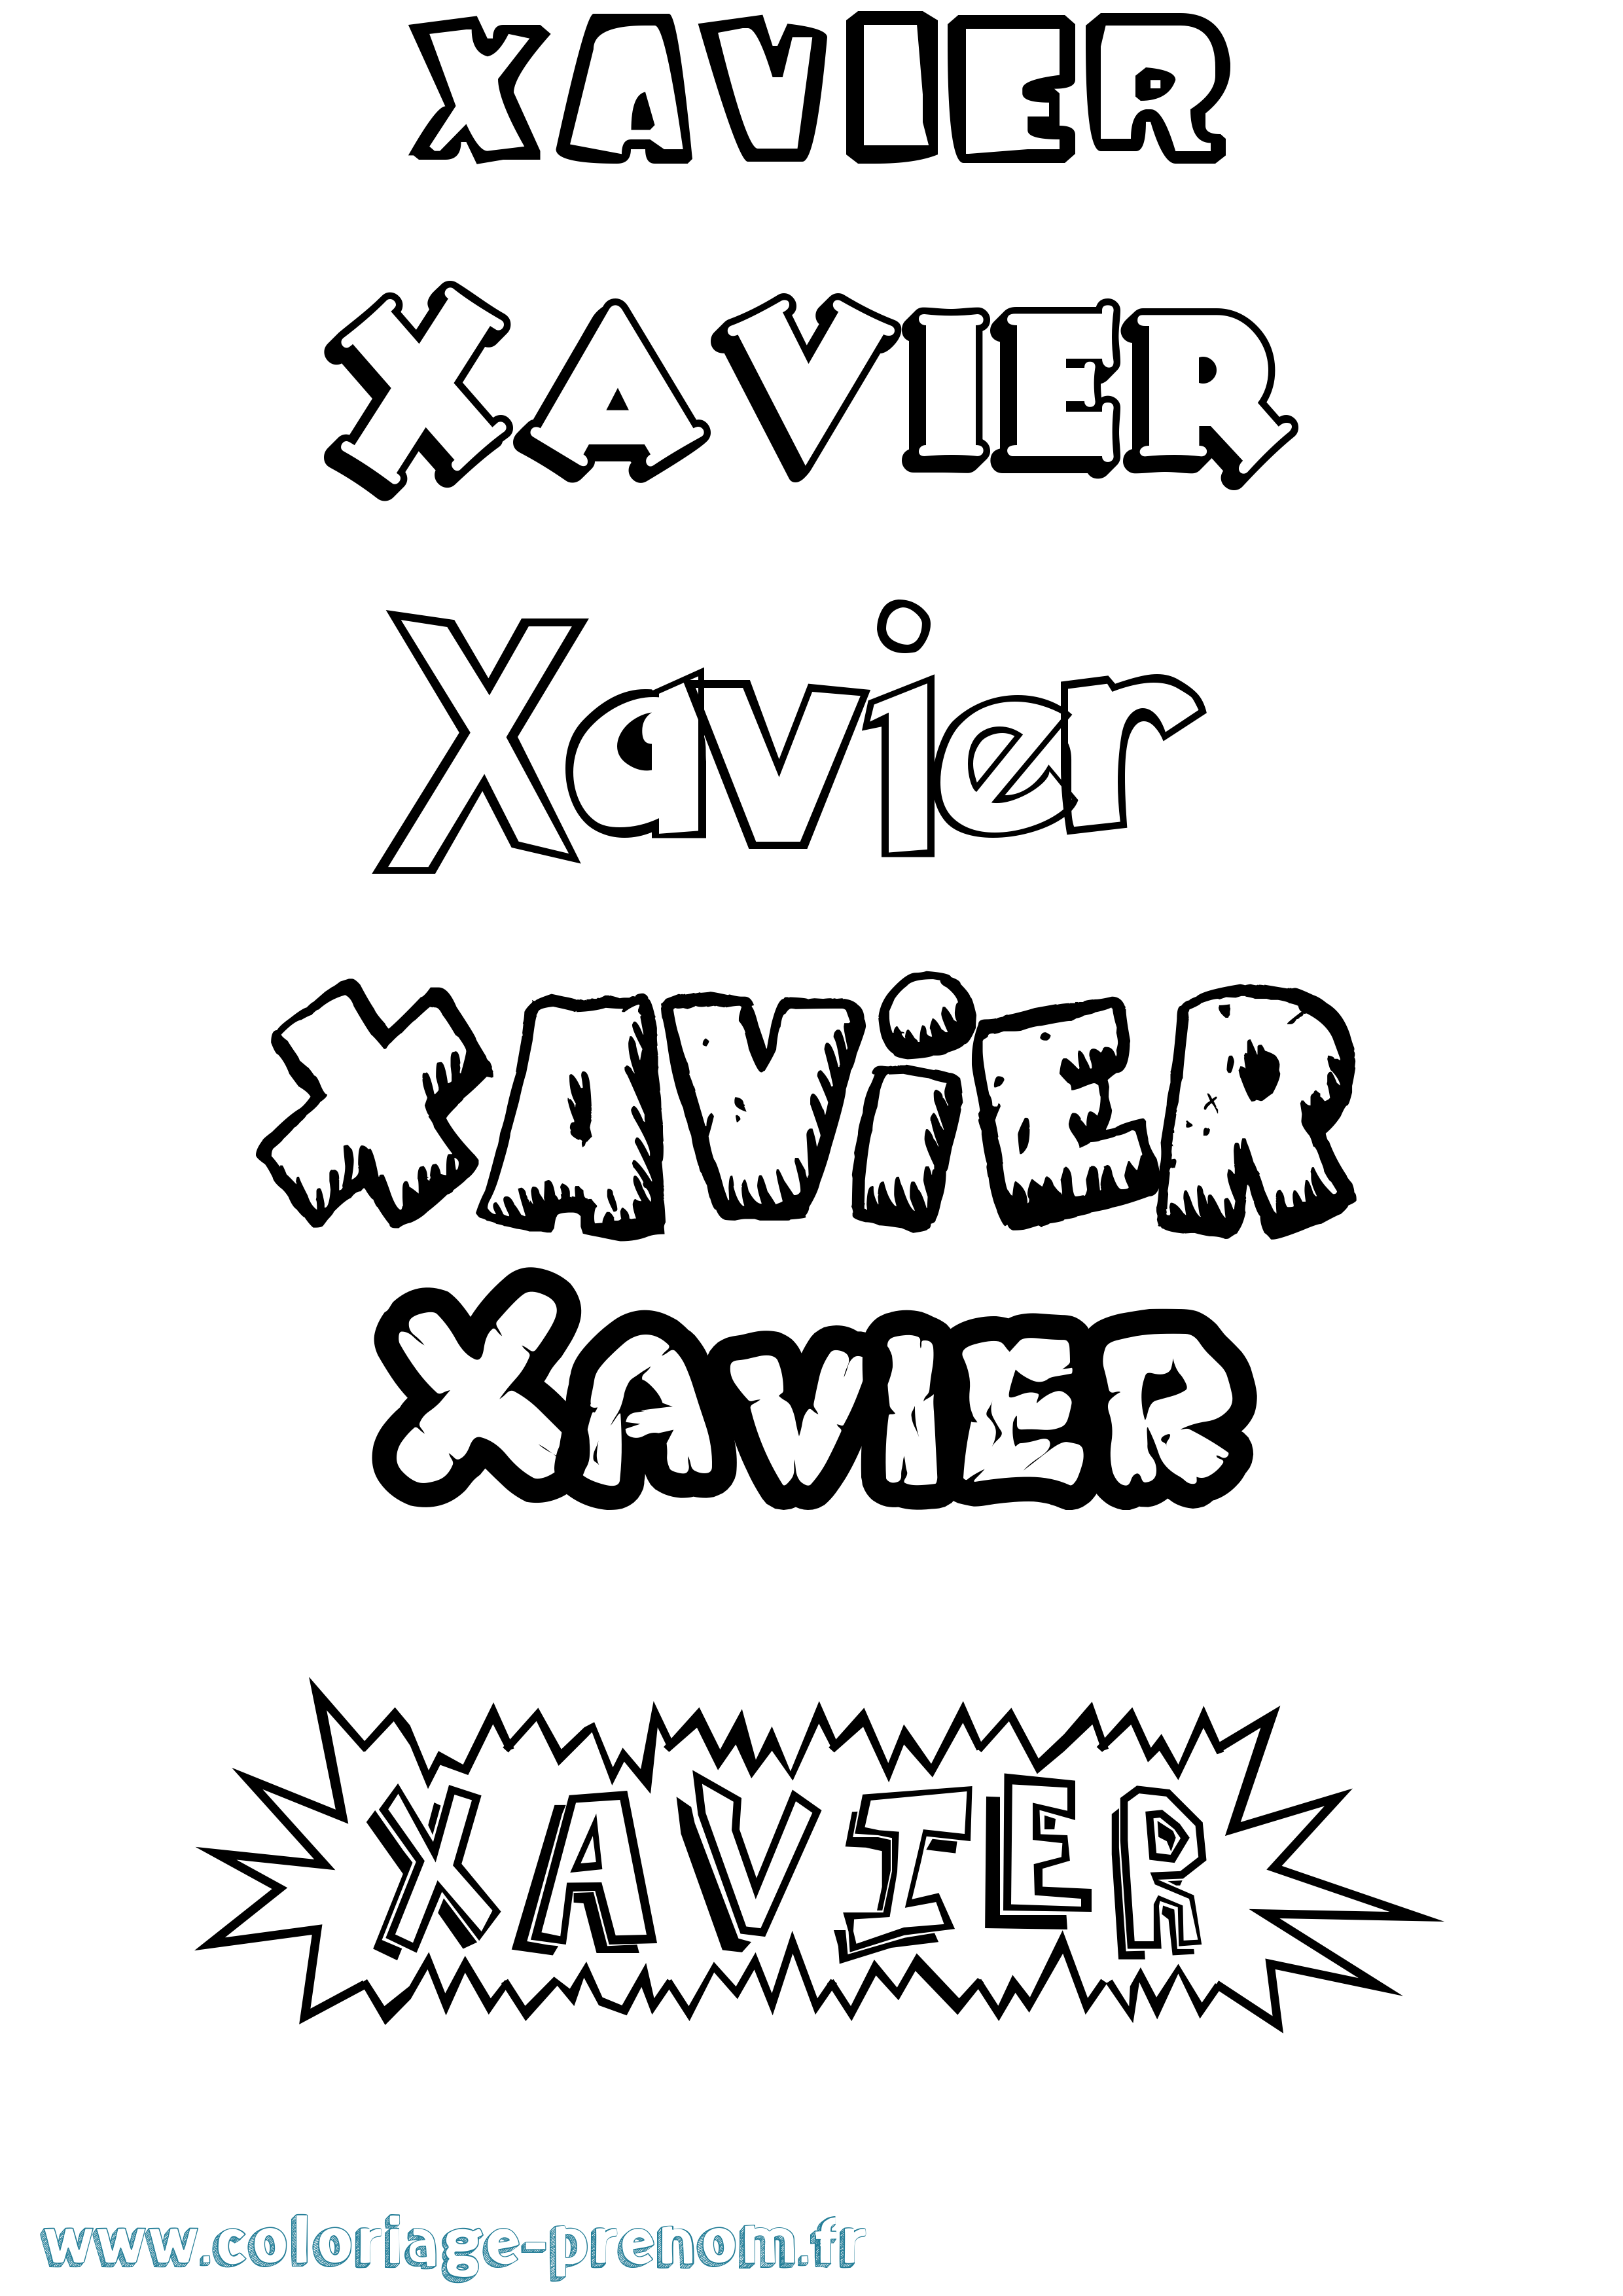 Coloriage prénom Xavier